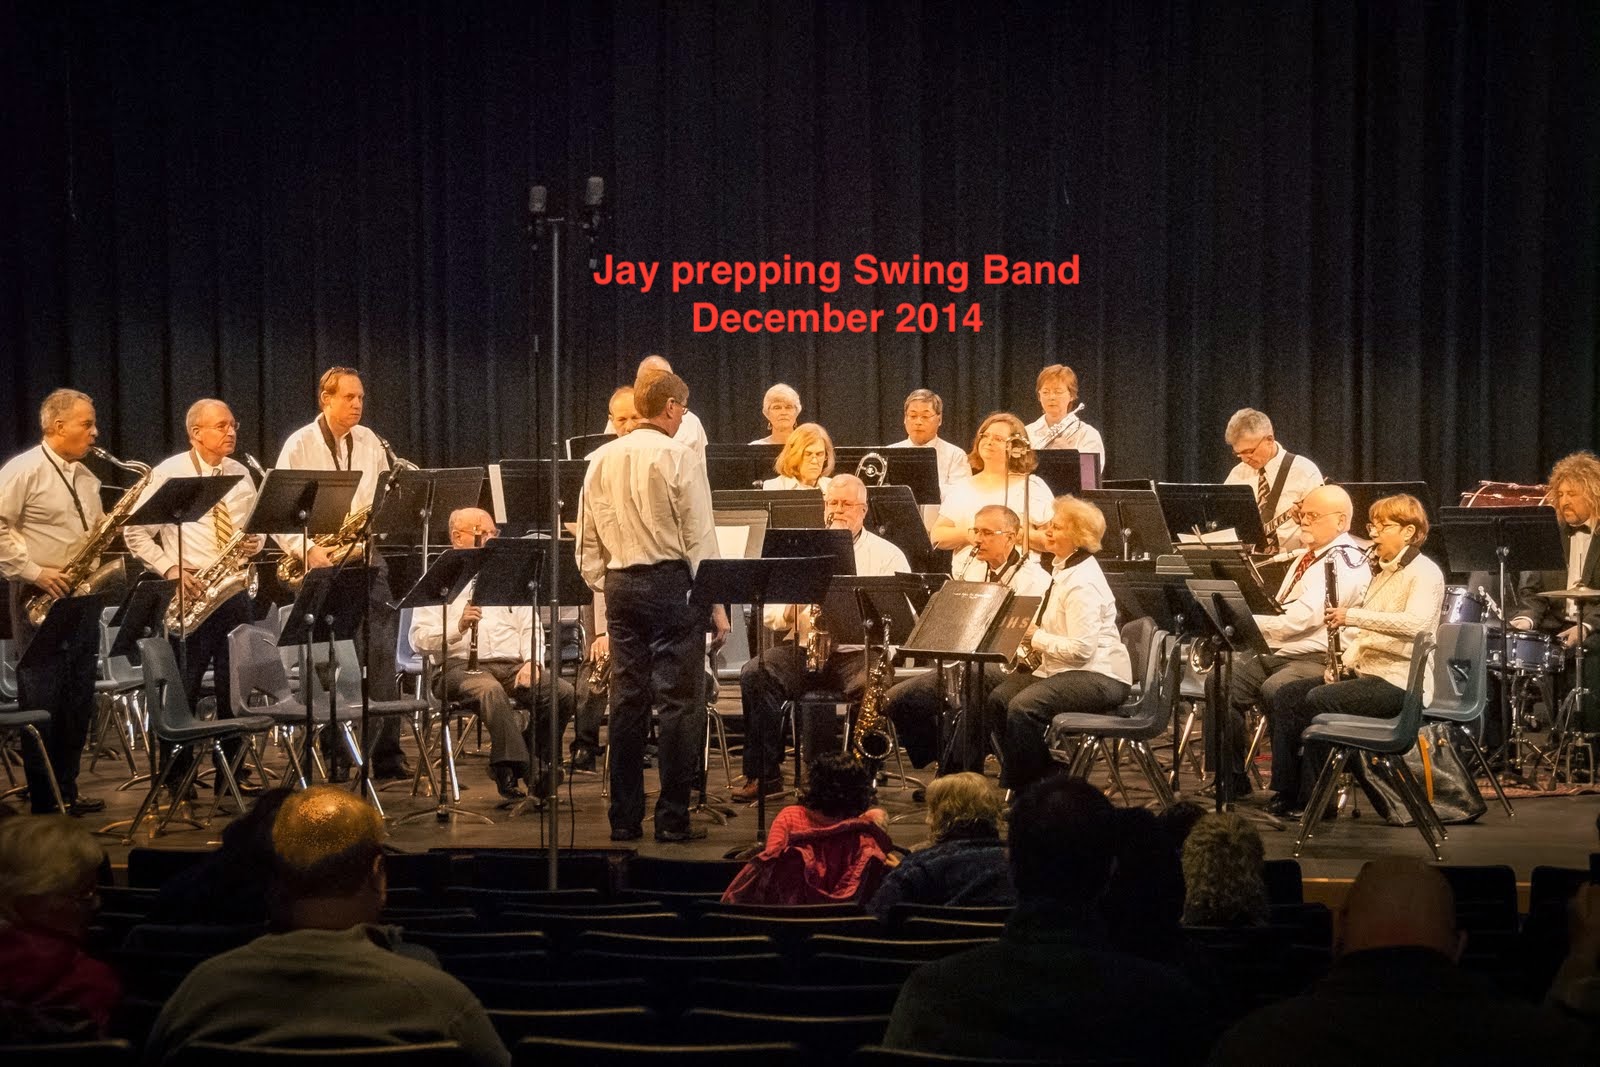 Jay prepping Swing Band Dec 2014